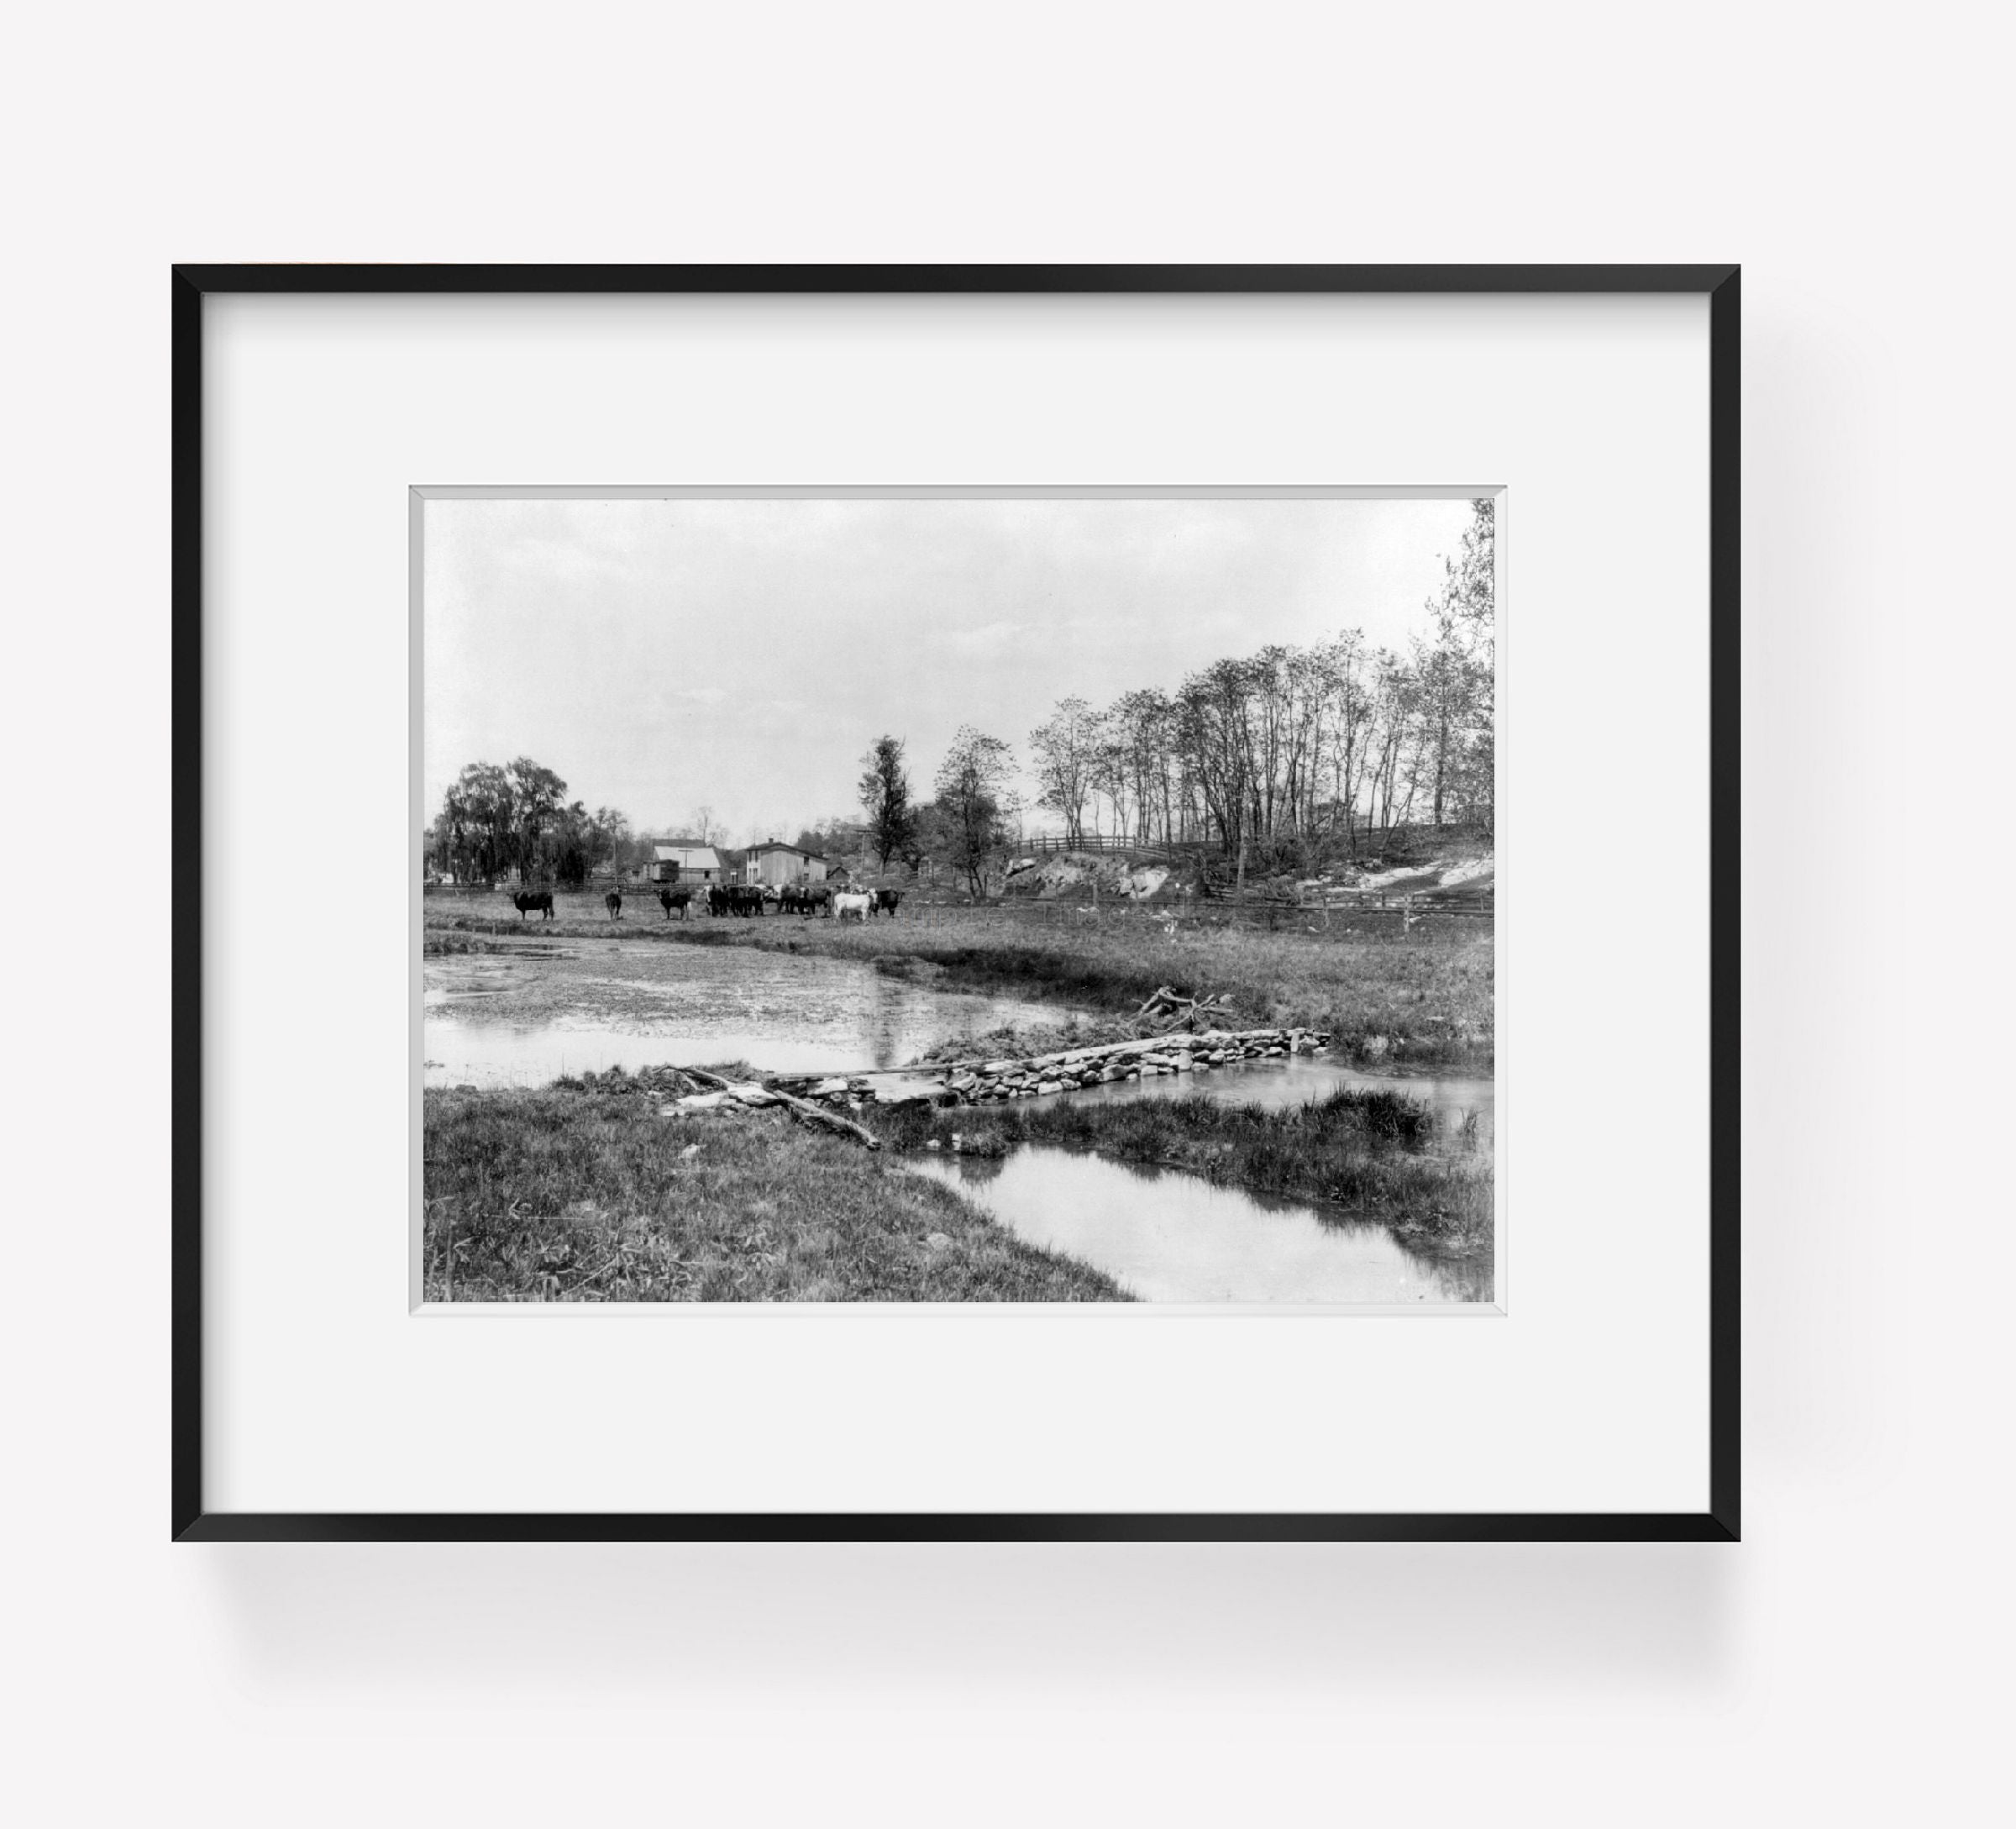 c1901 photograph of W. Va. - Charleston vicinity - views of Harewood, the estate